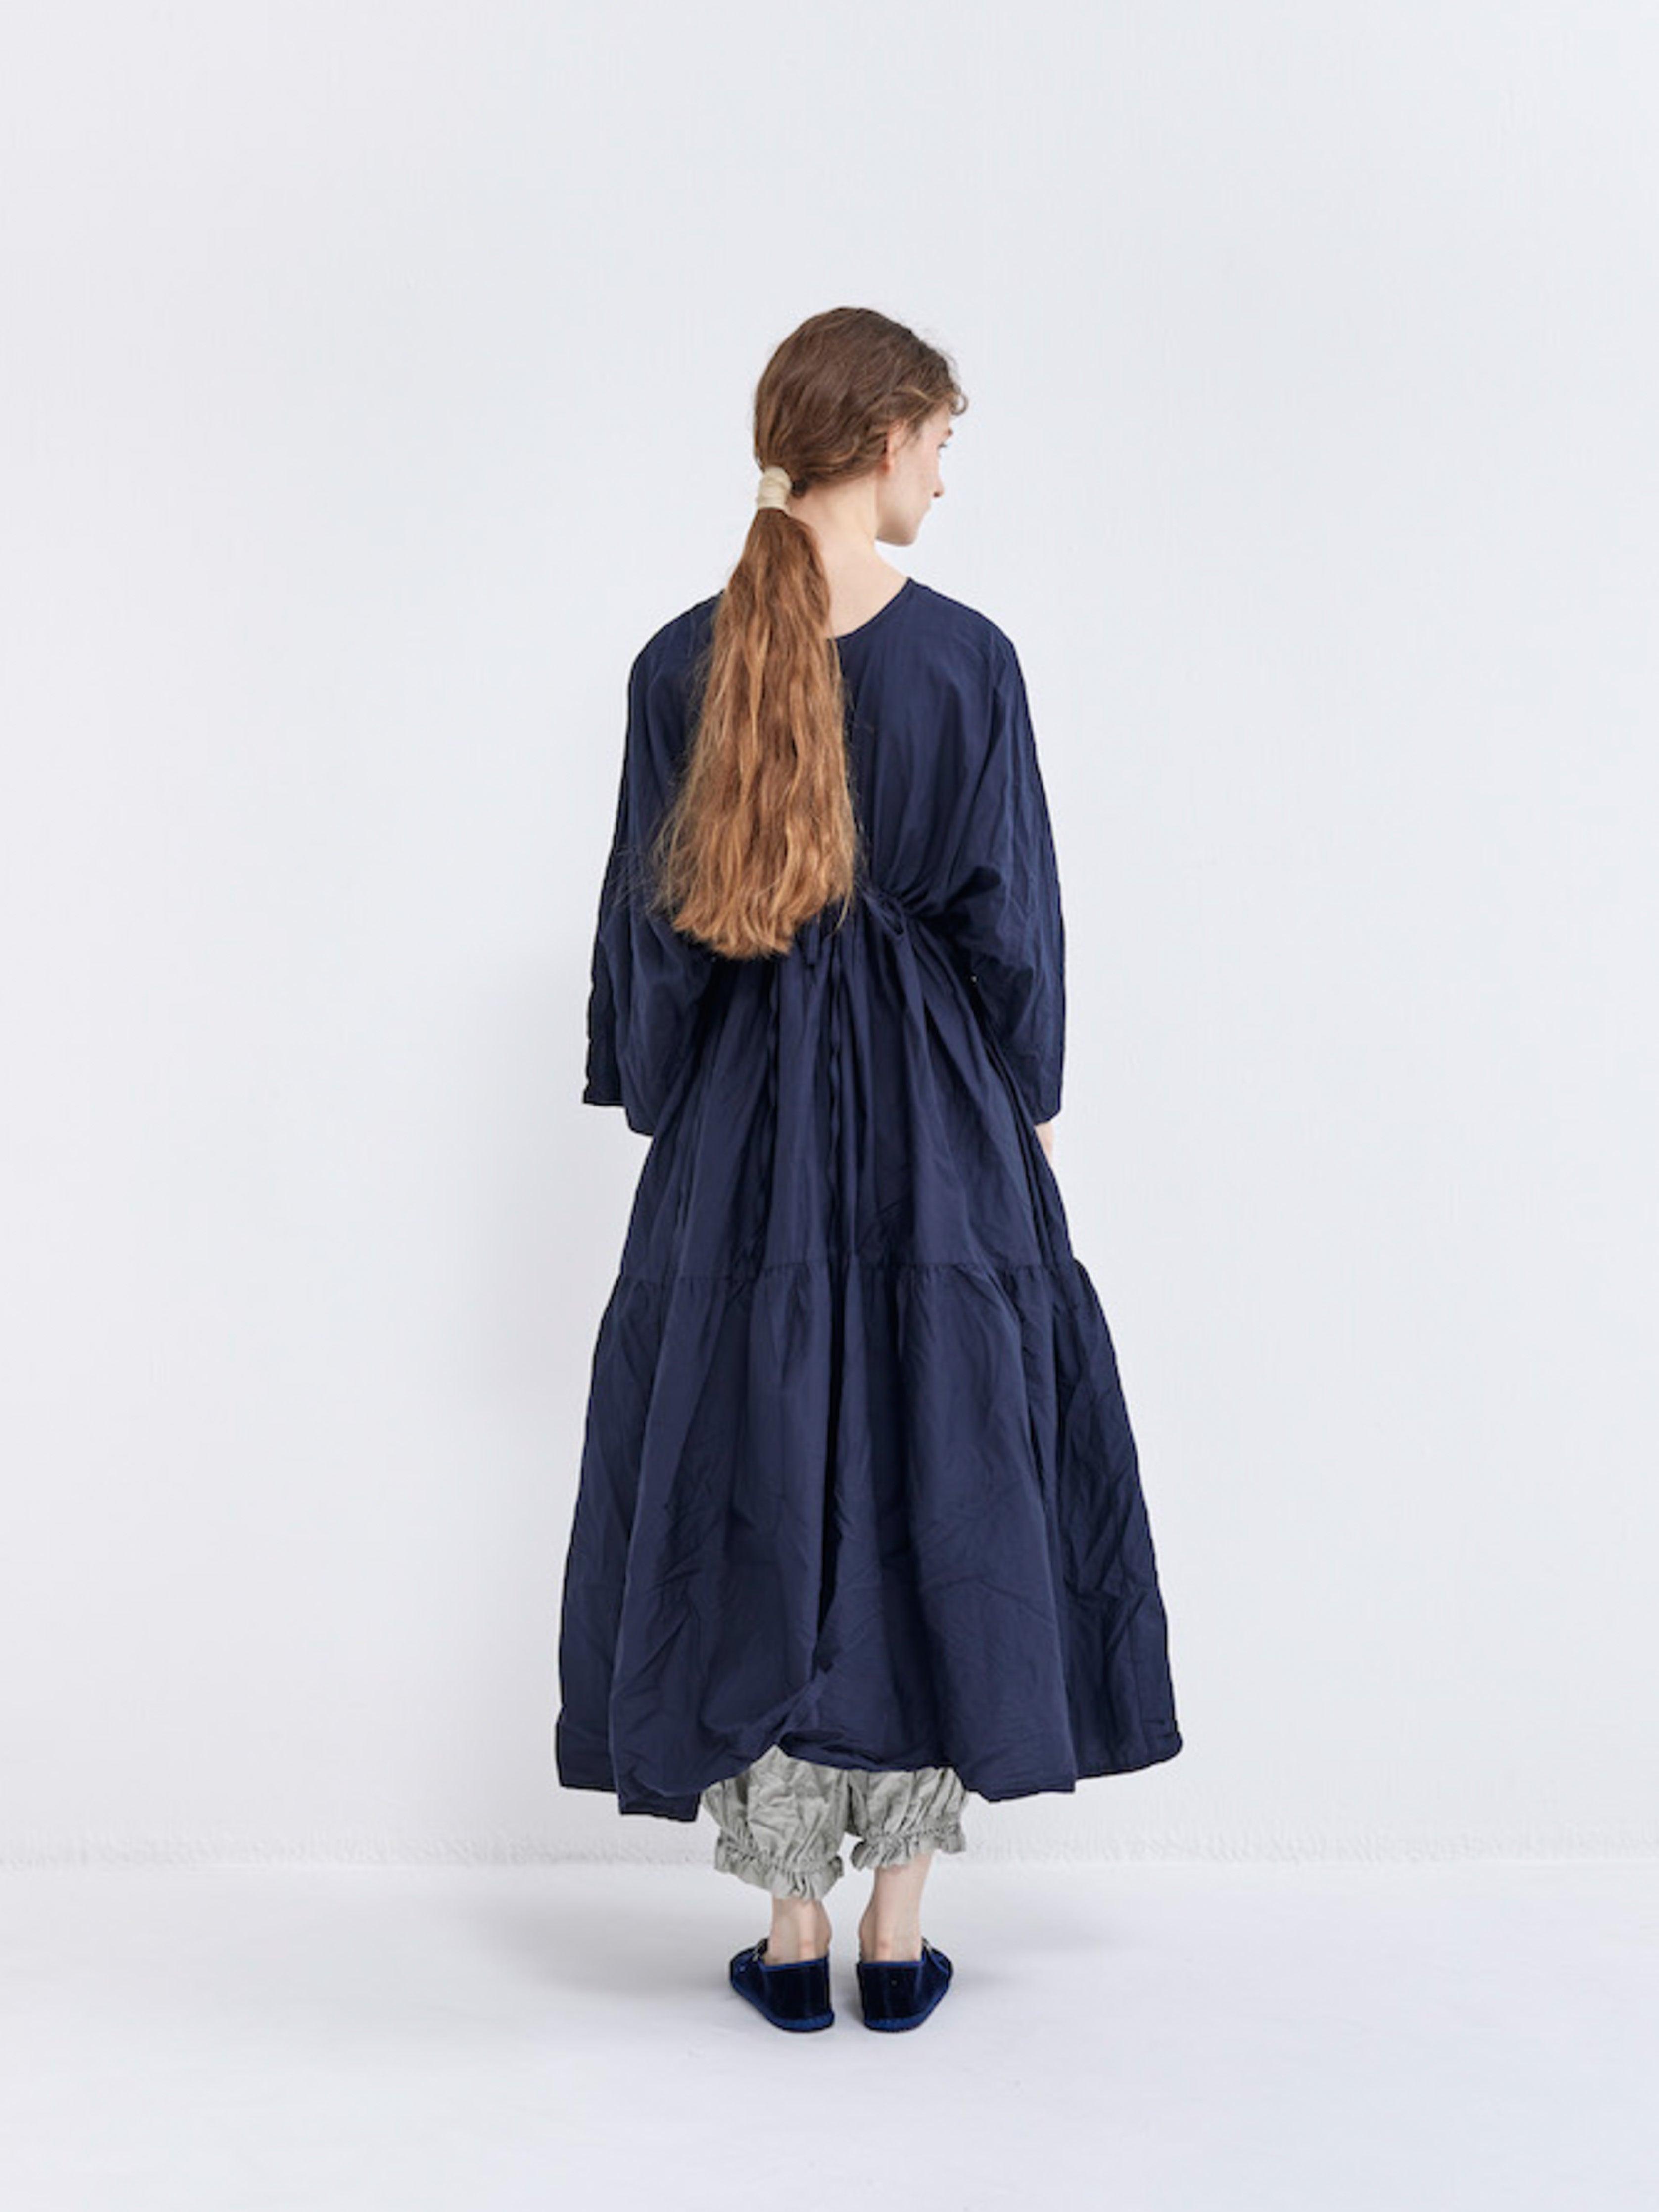 Namu Shop - Veritecoeur Co / Silk Two Way Dress - Navy